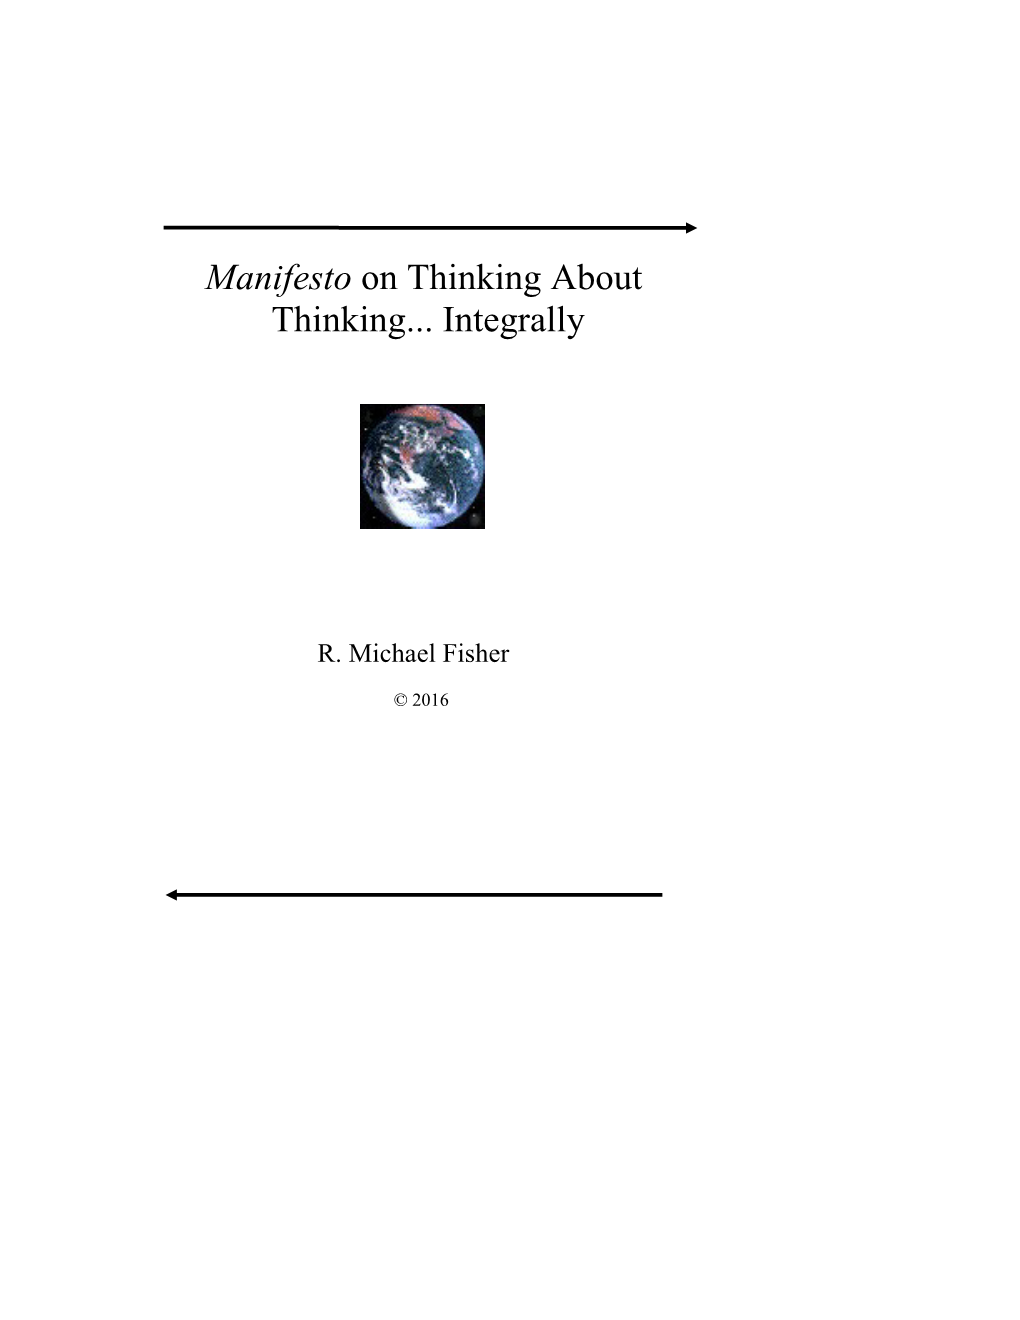 Manifesto: Thinking About Thinking R. M. Fisher 2016